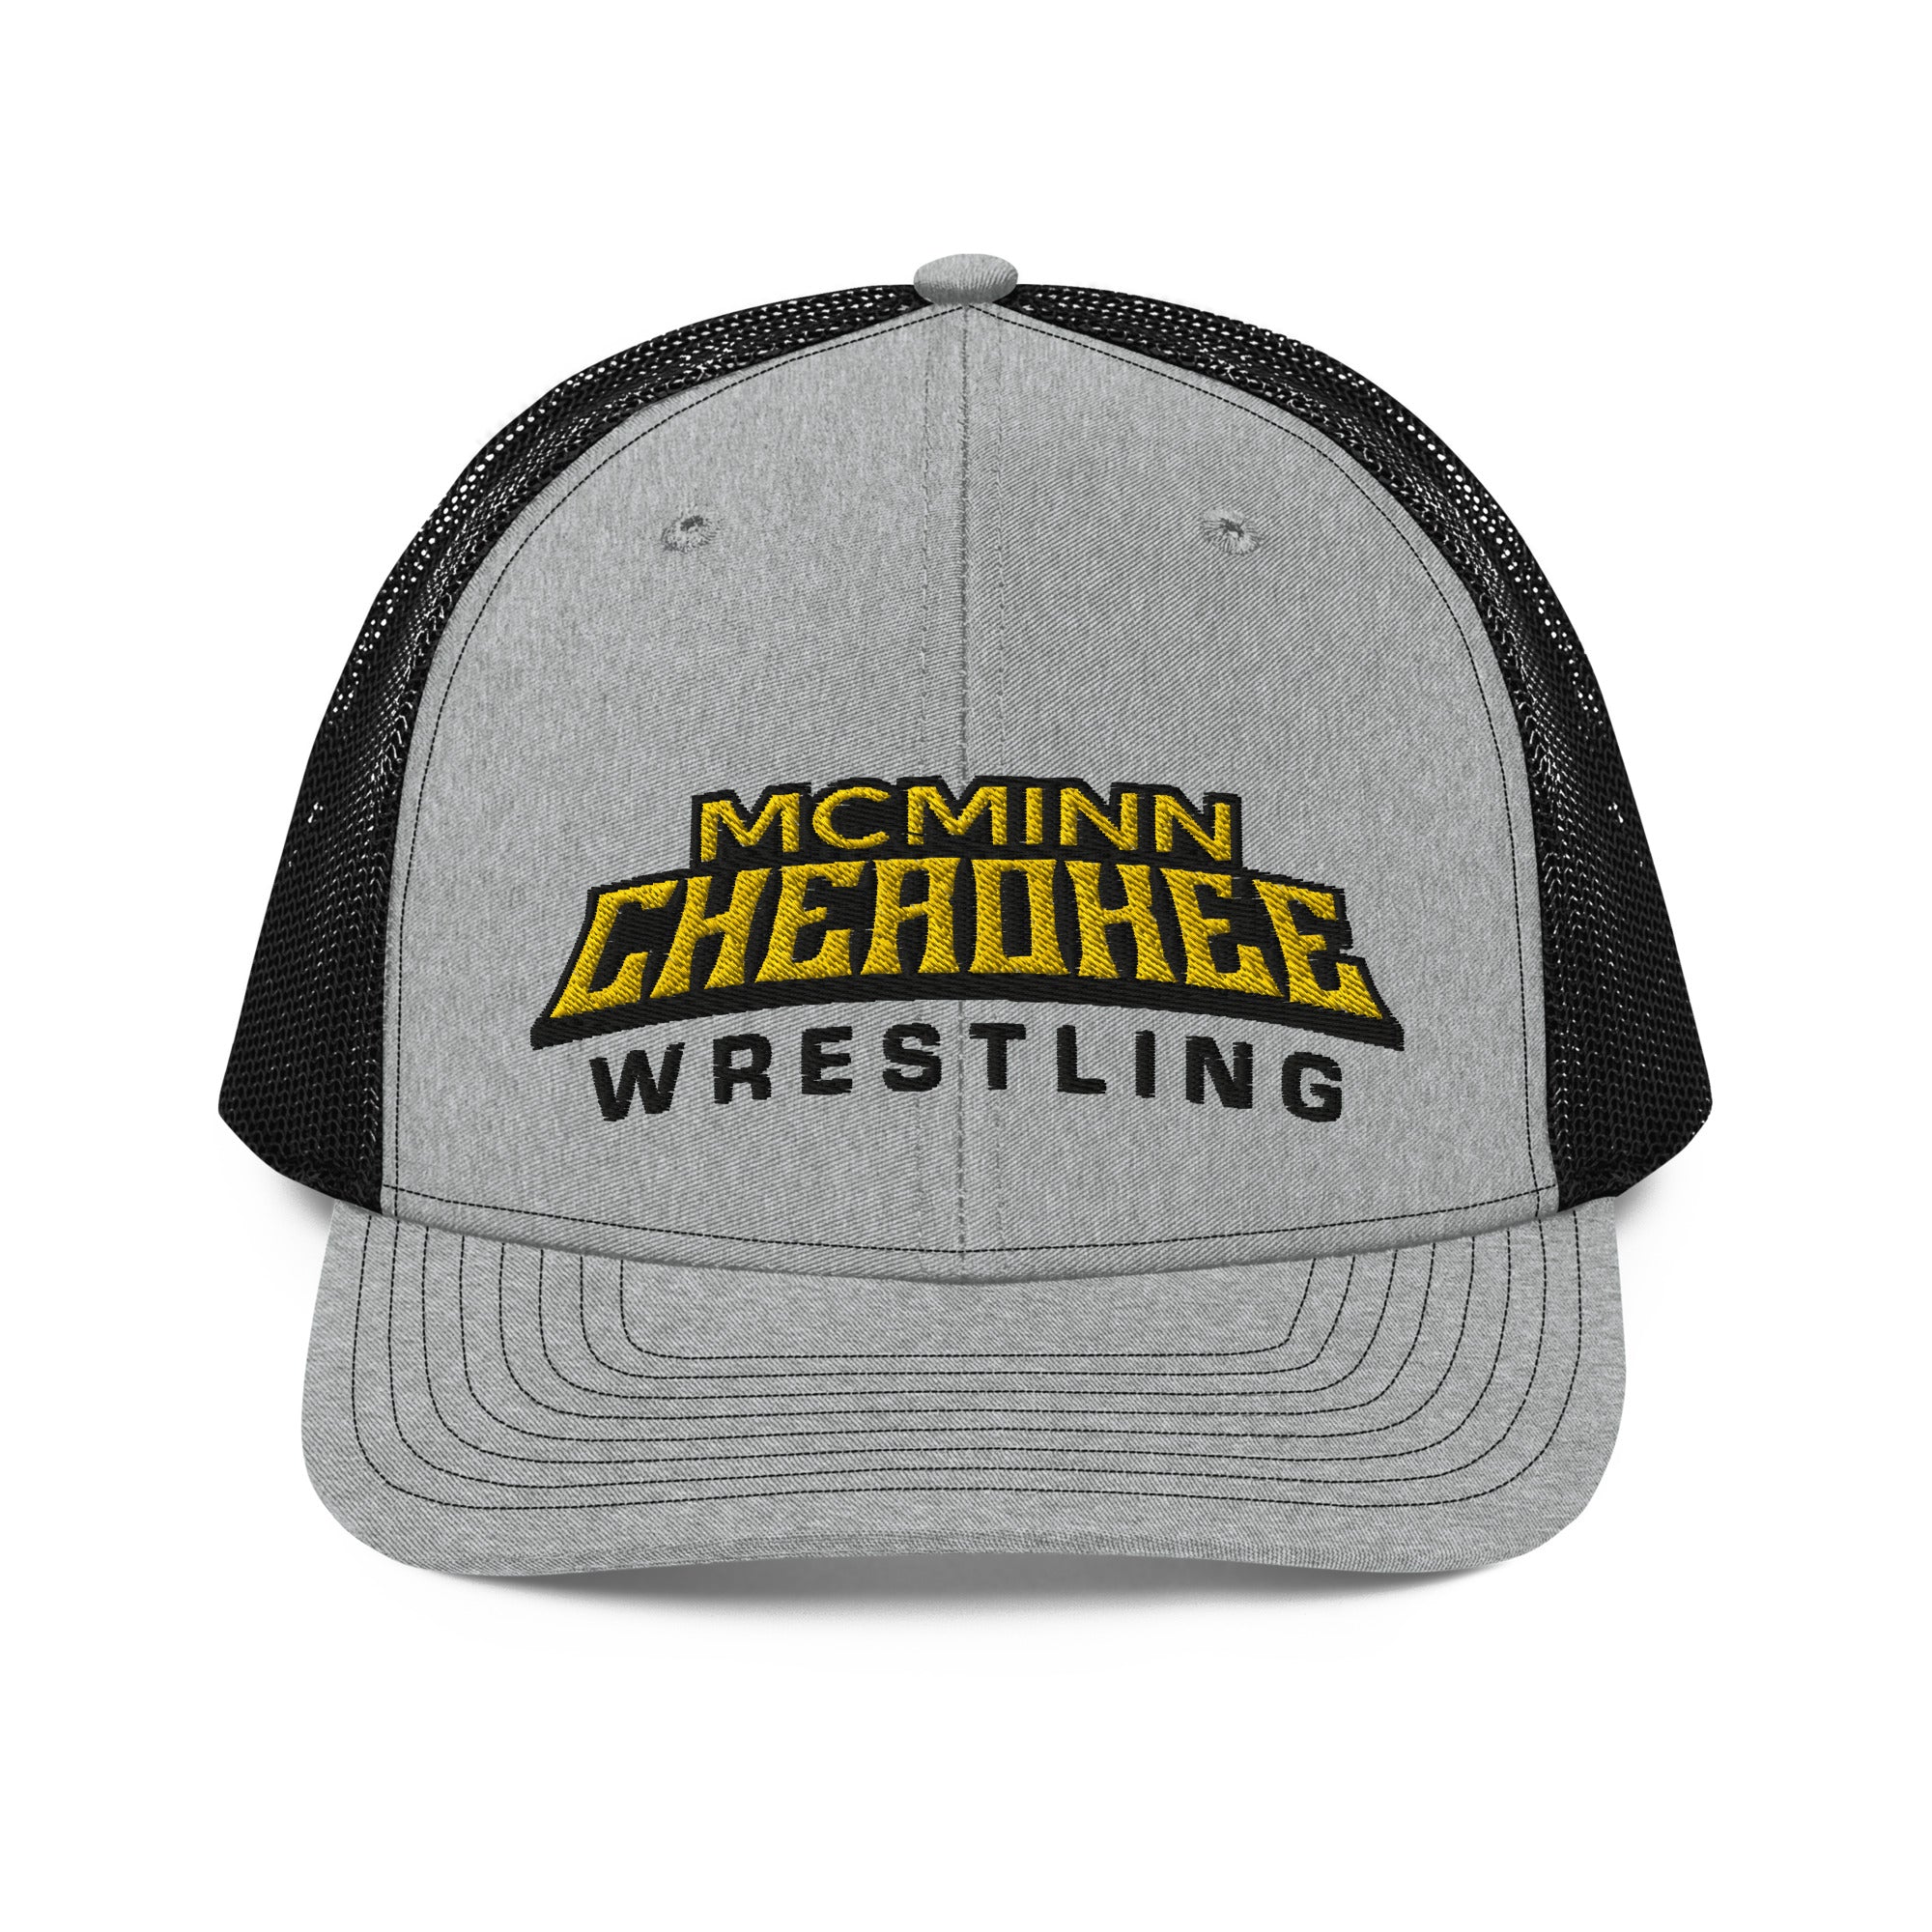 McMinn Cherokees Wrestling Snapback Trucker Cap